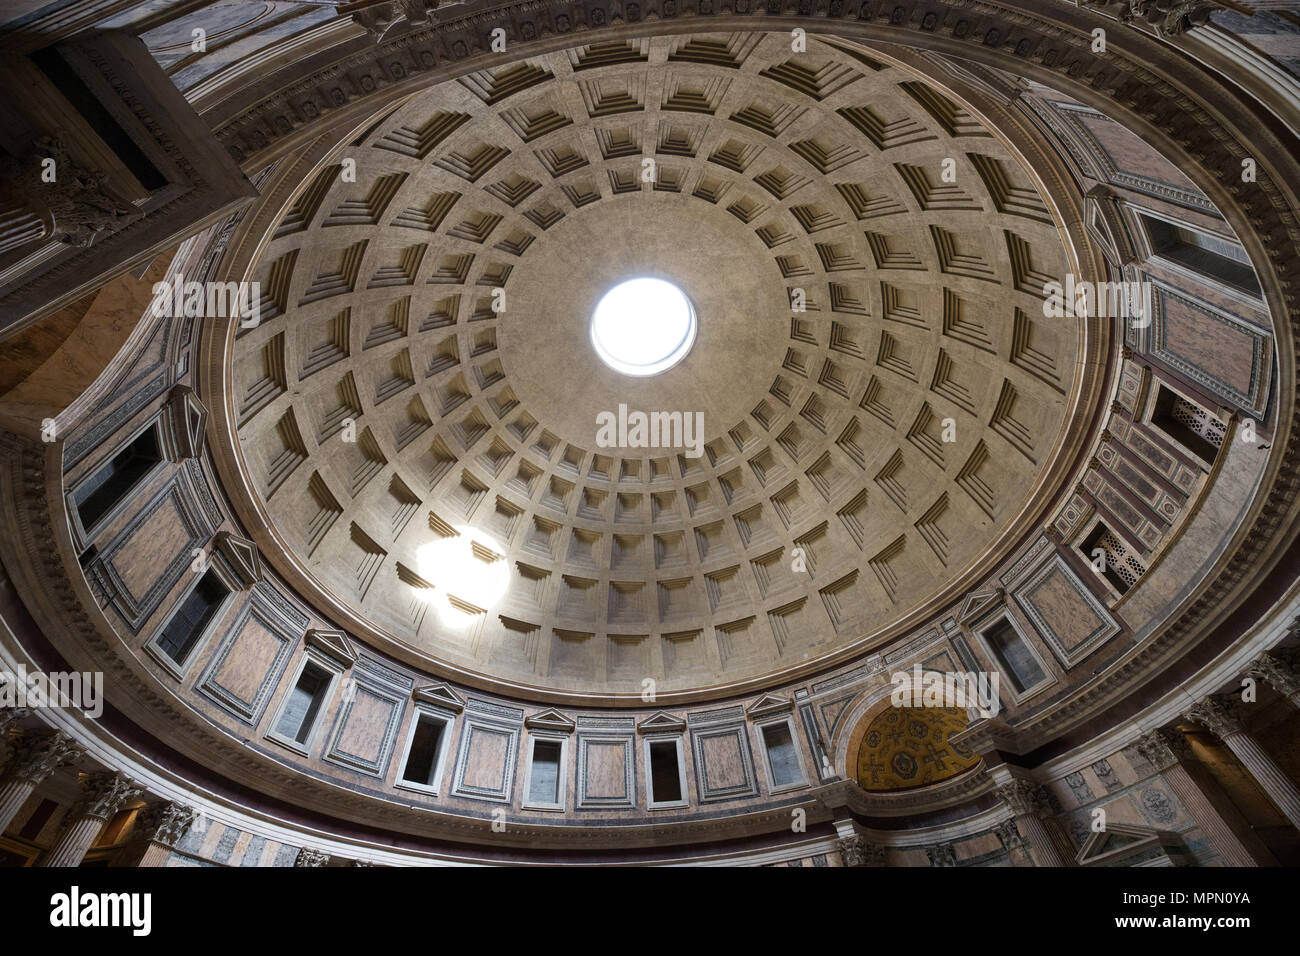 Pantheon dome, interior  Rome italy Stock Photo